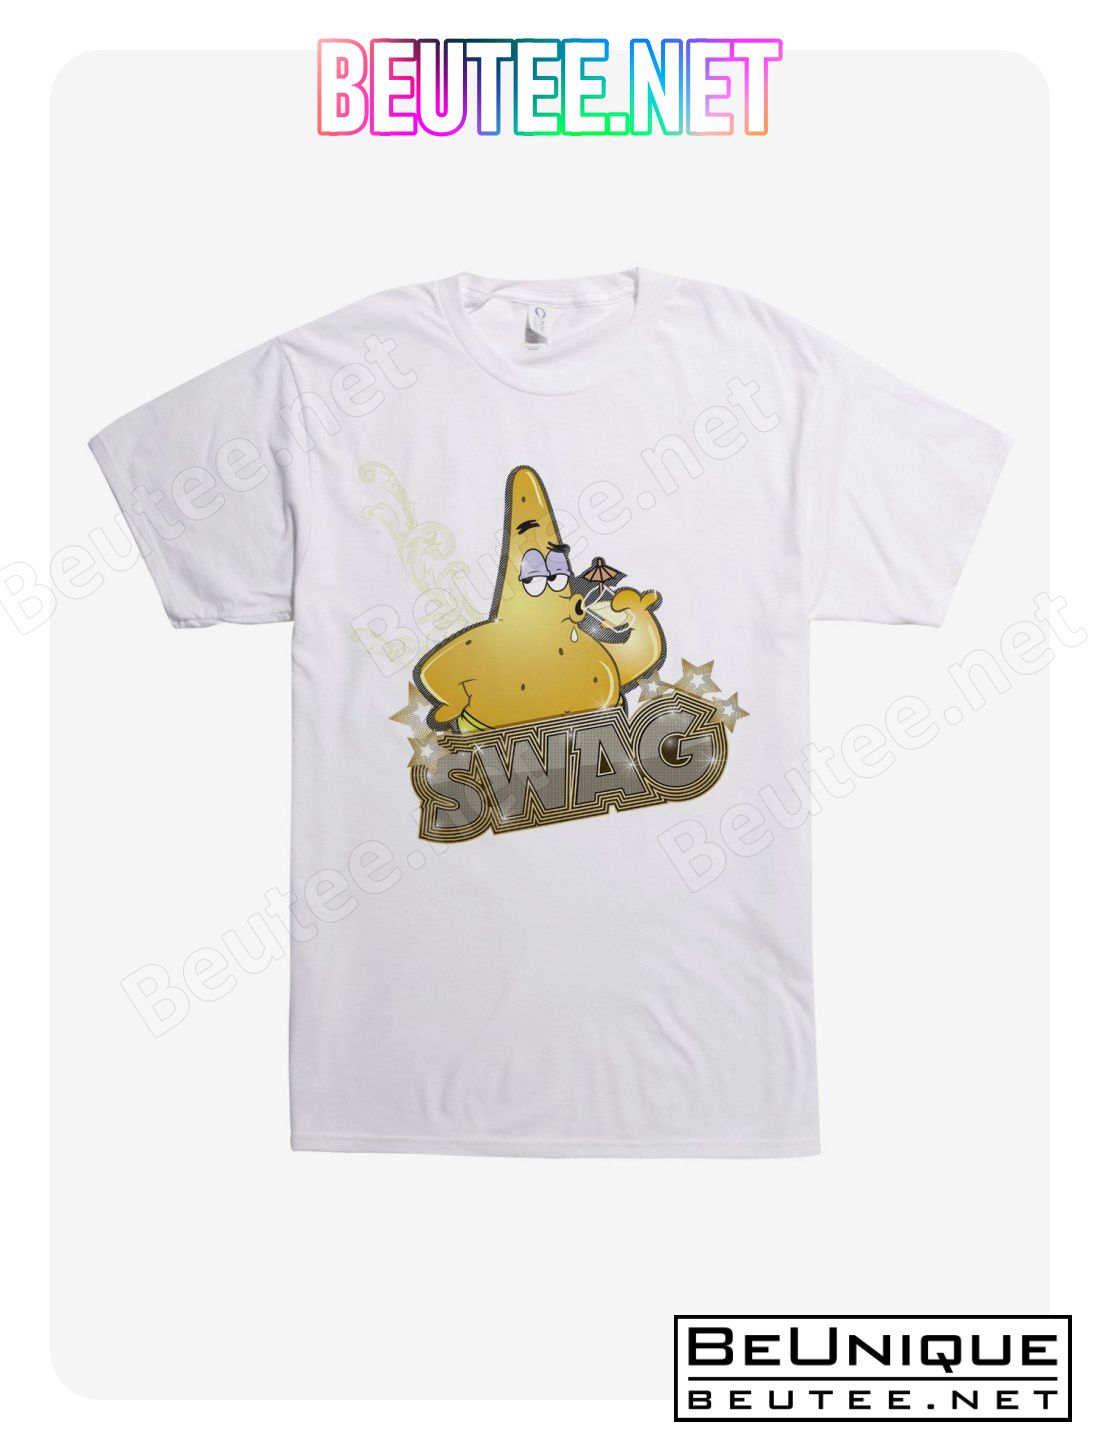 SpongeBob SquarePants Patrick Gold Swag T-Shirt